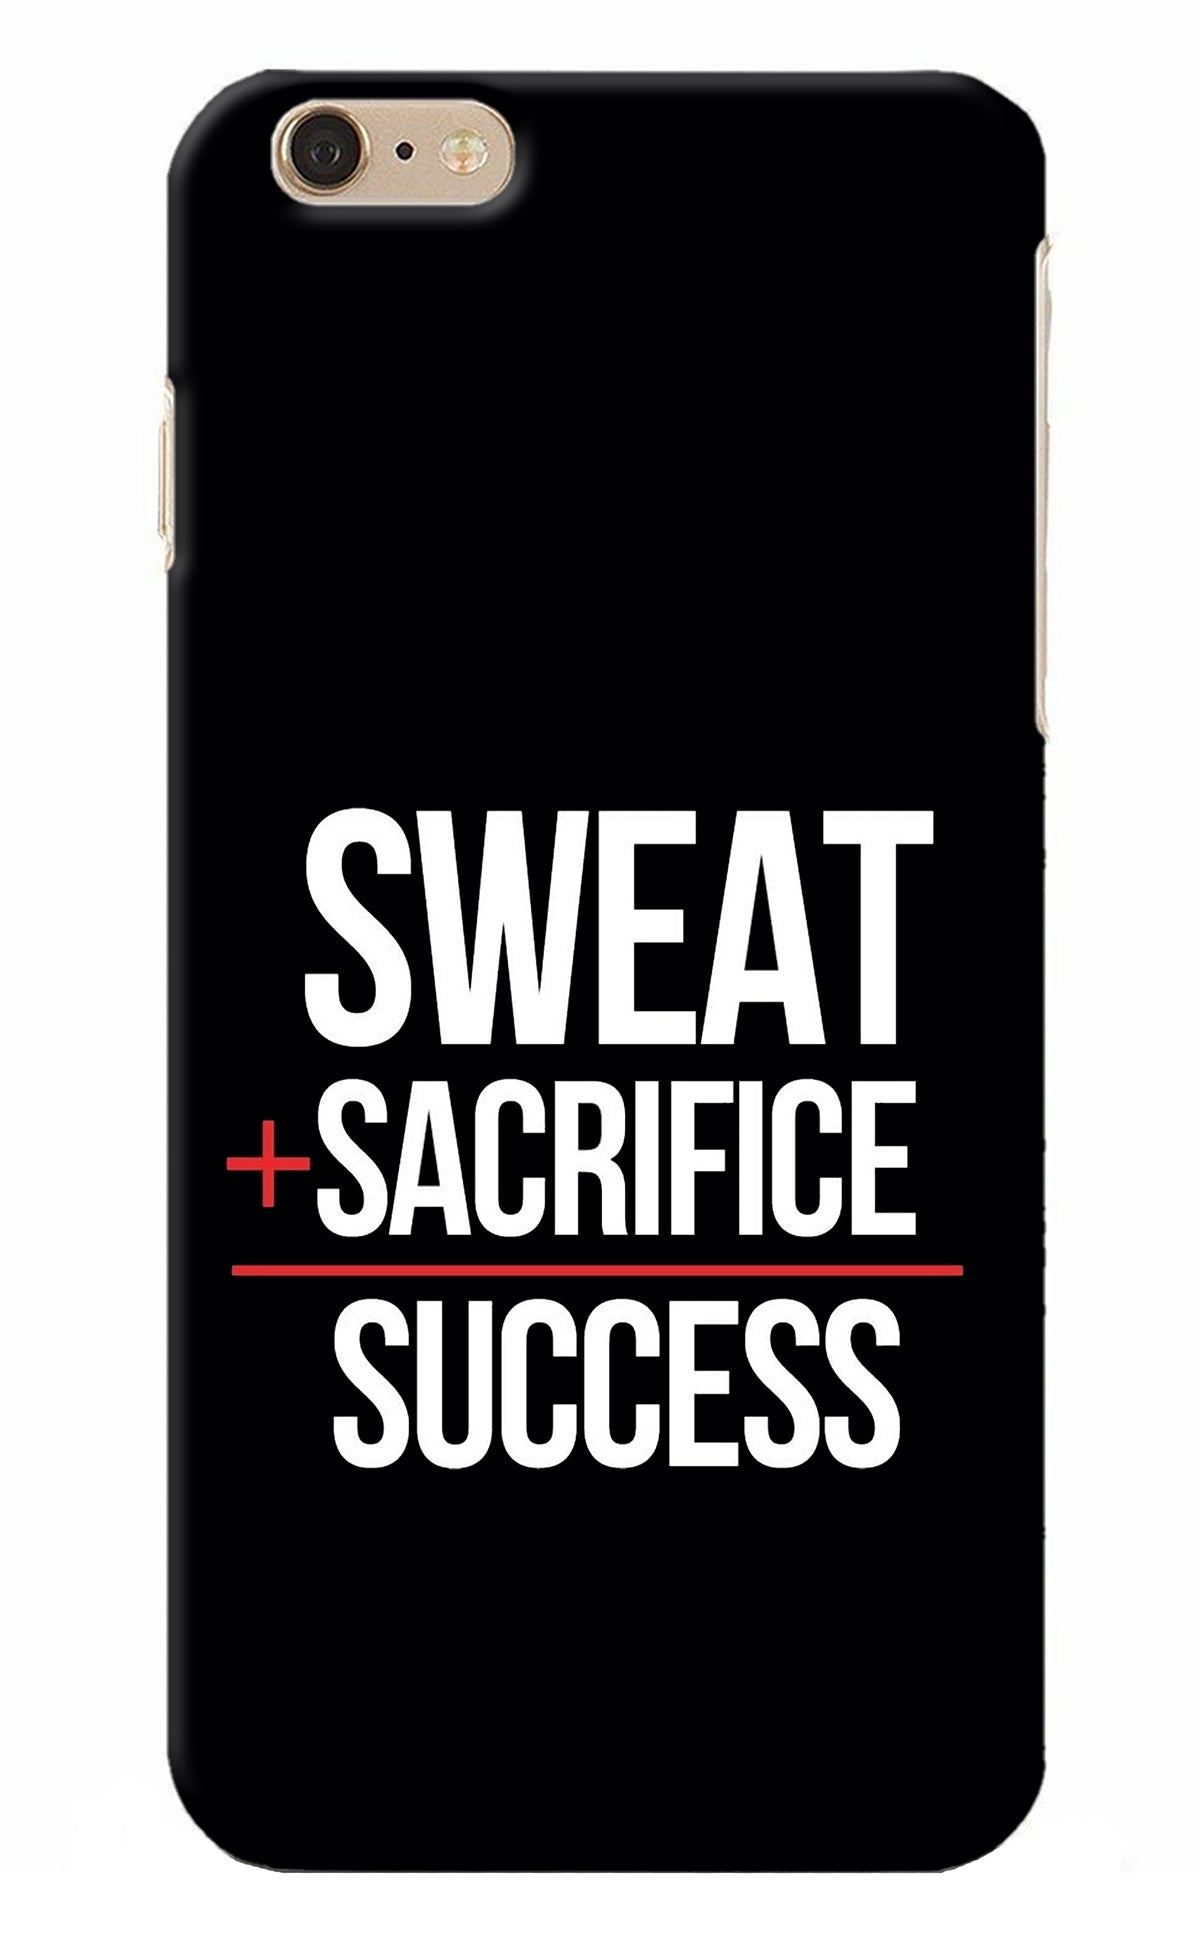 Sweat Sacrifice Success iPhone 6 Plus/6s Plus Back Cover